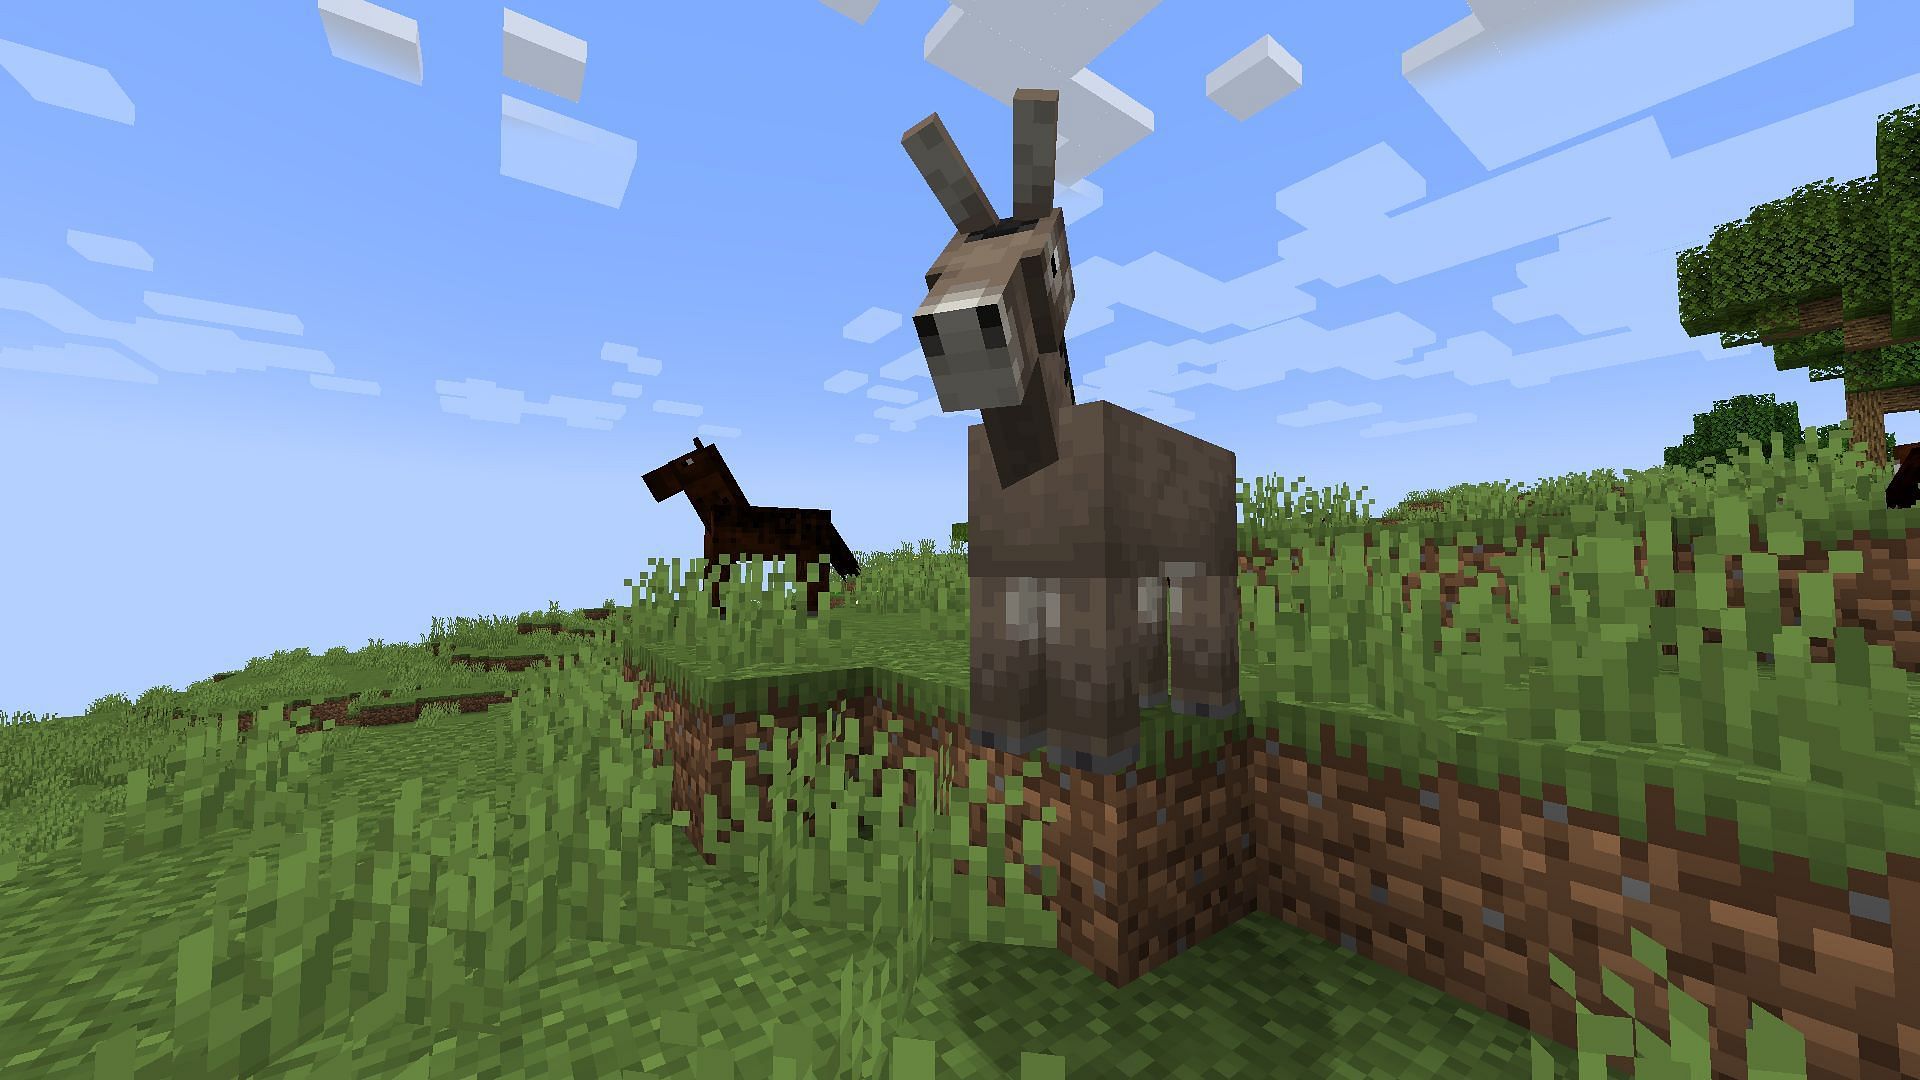 Donkey in Minecraft (Image via Mojang)